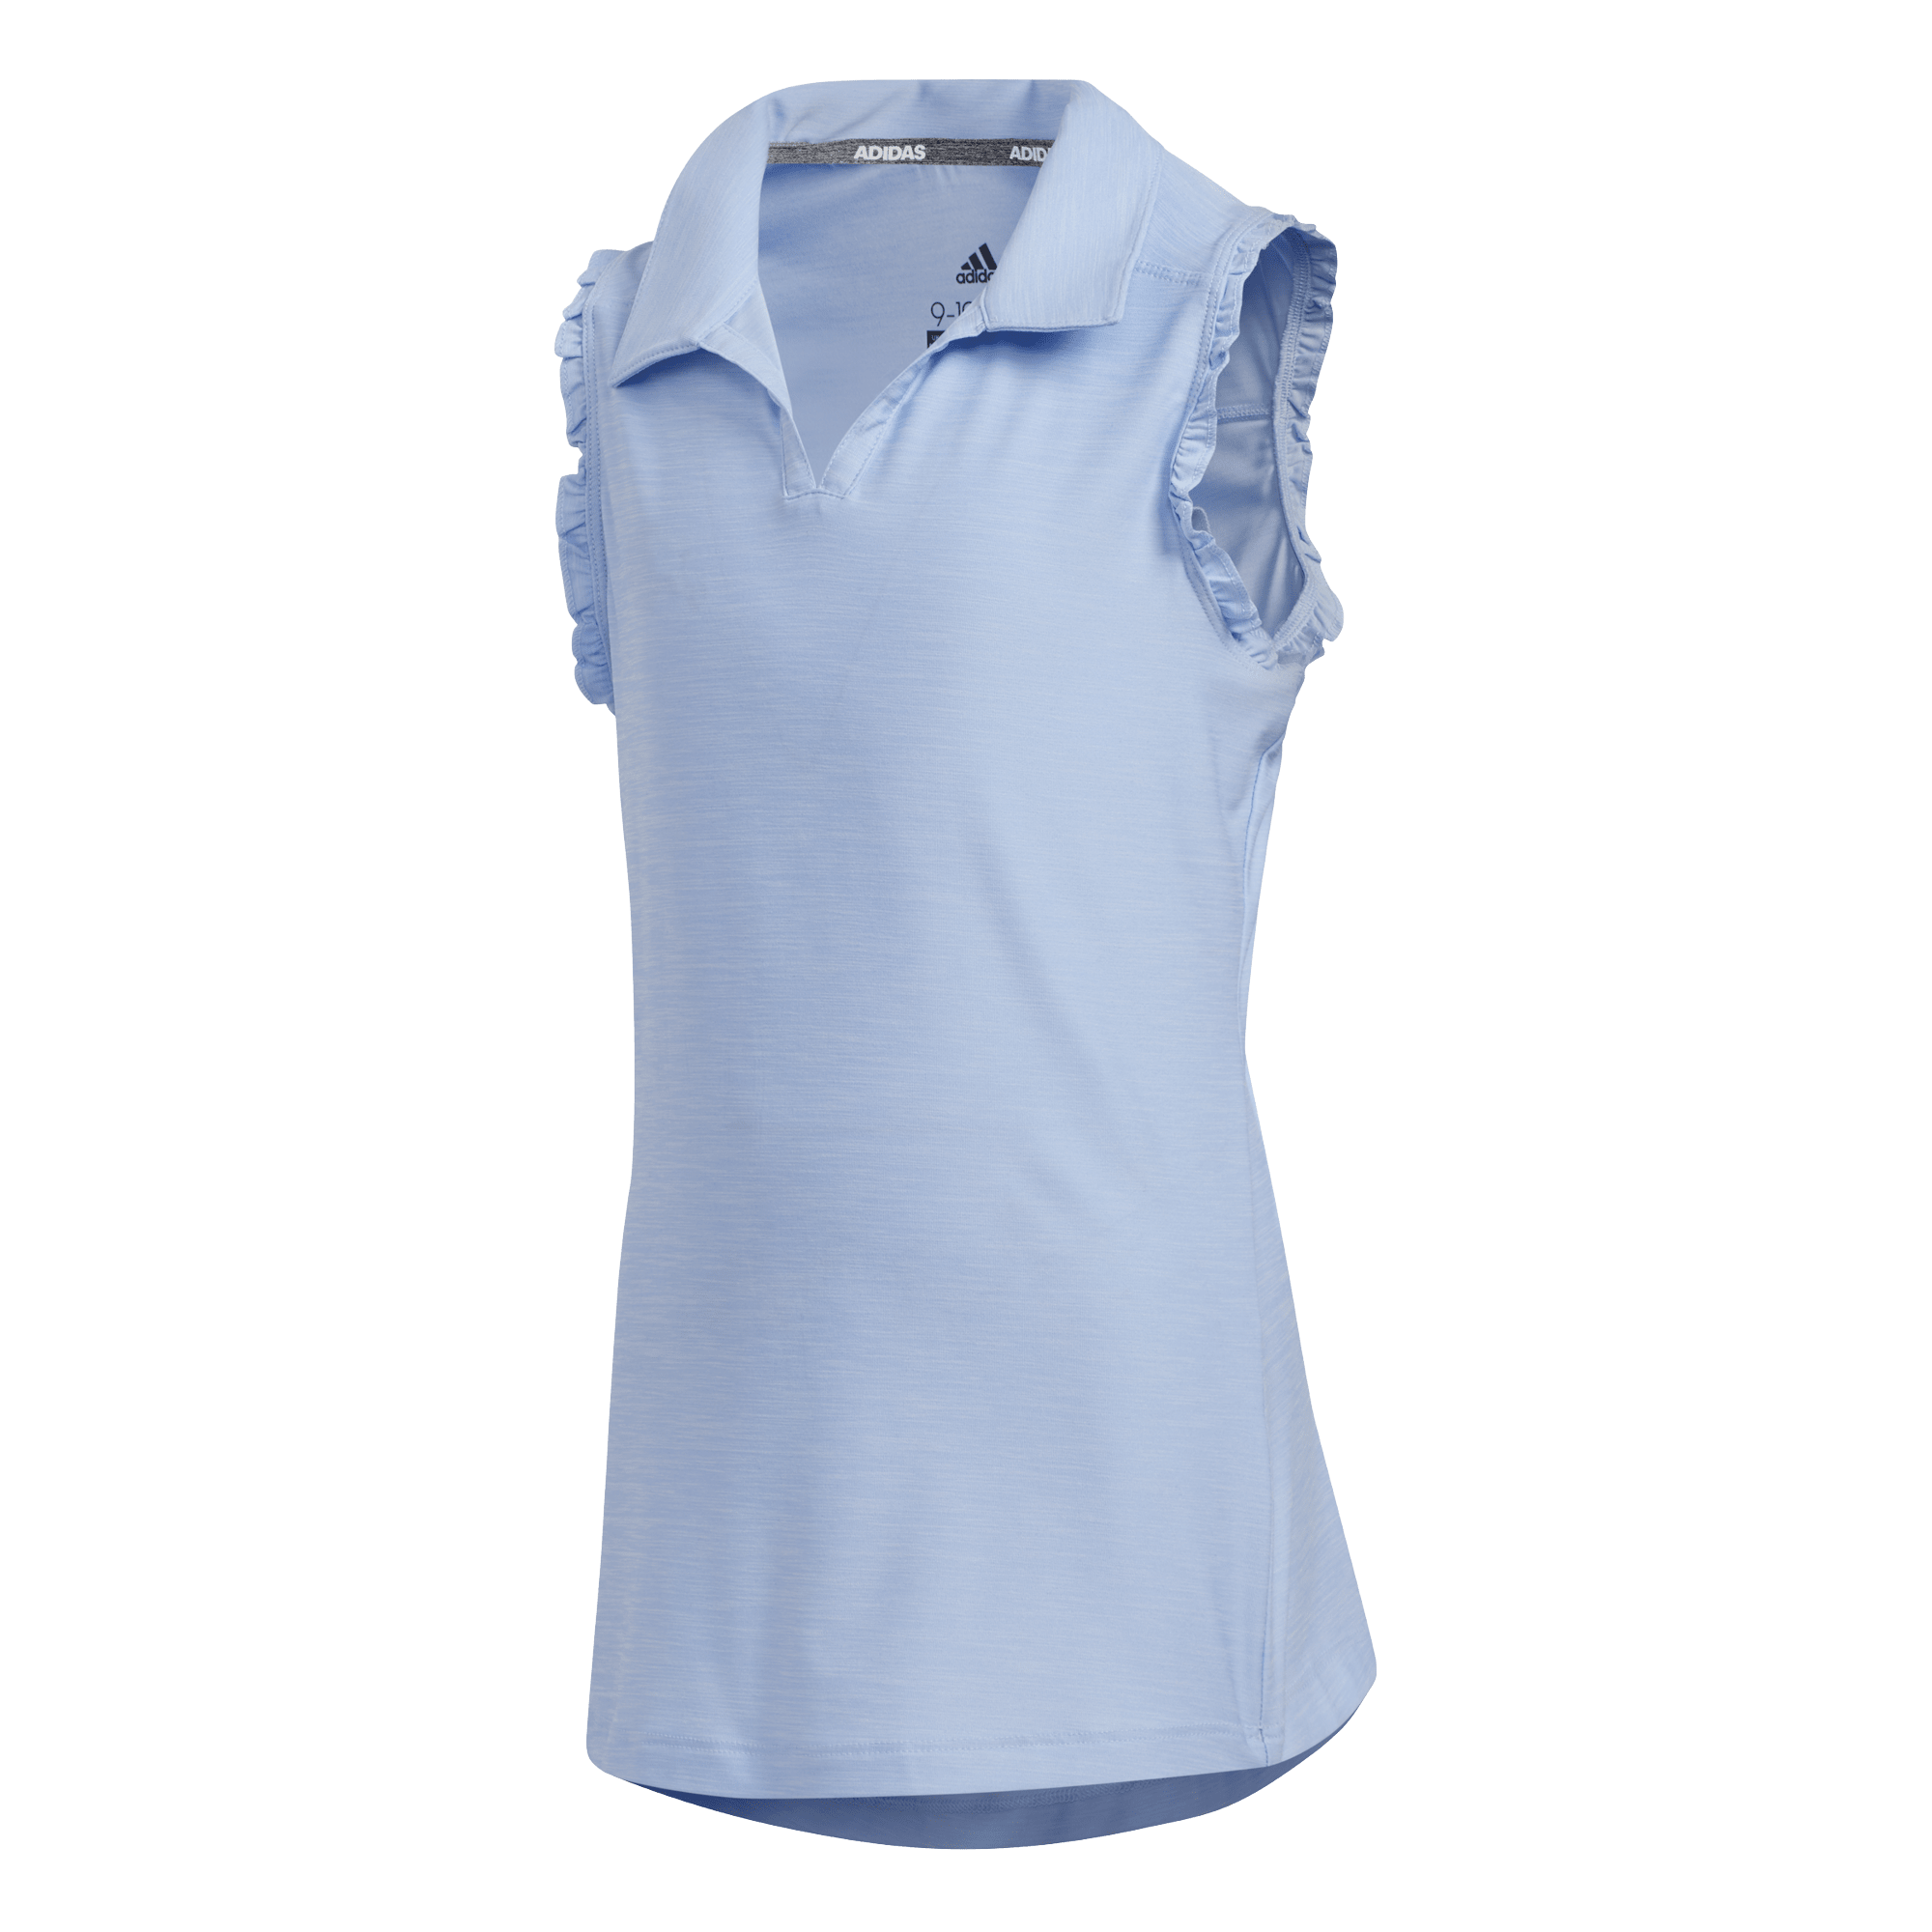 adidas sleeveless golf top